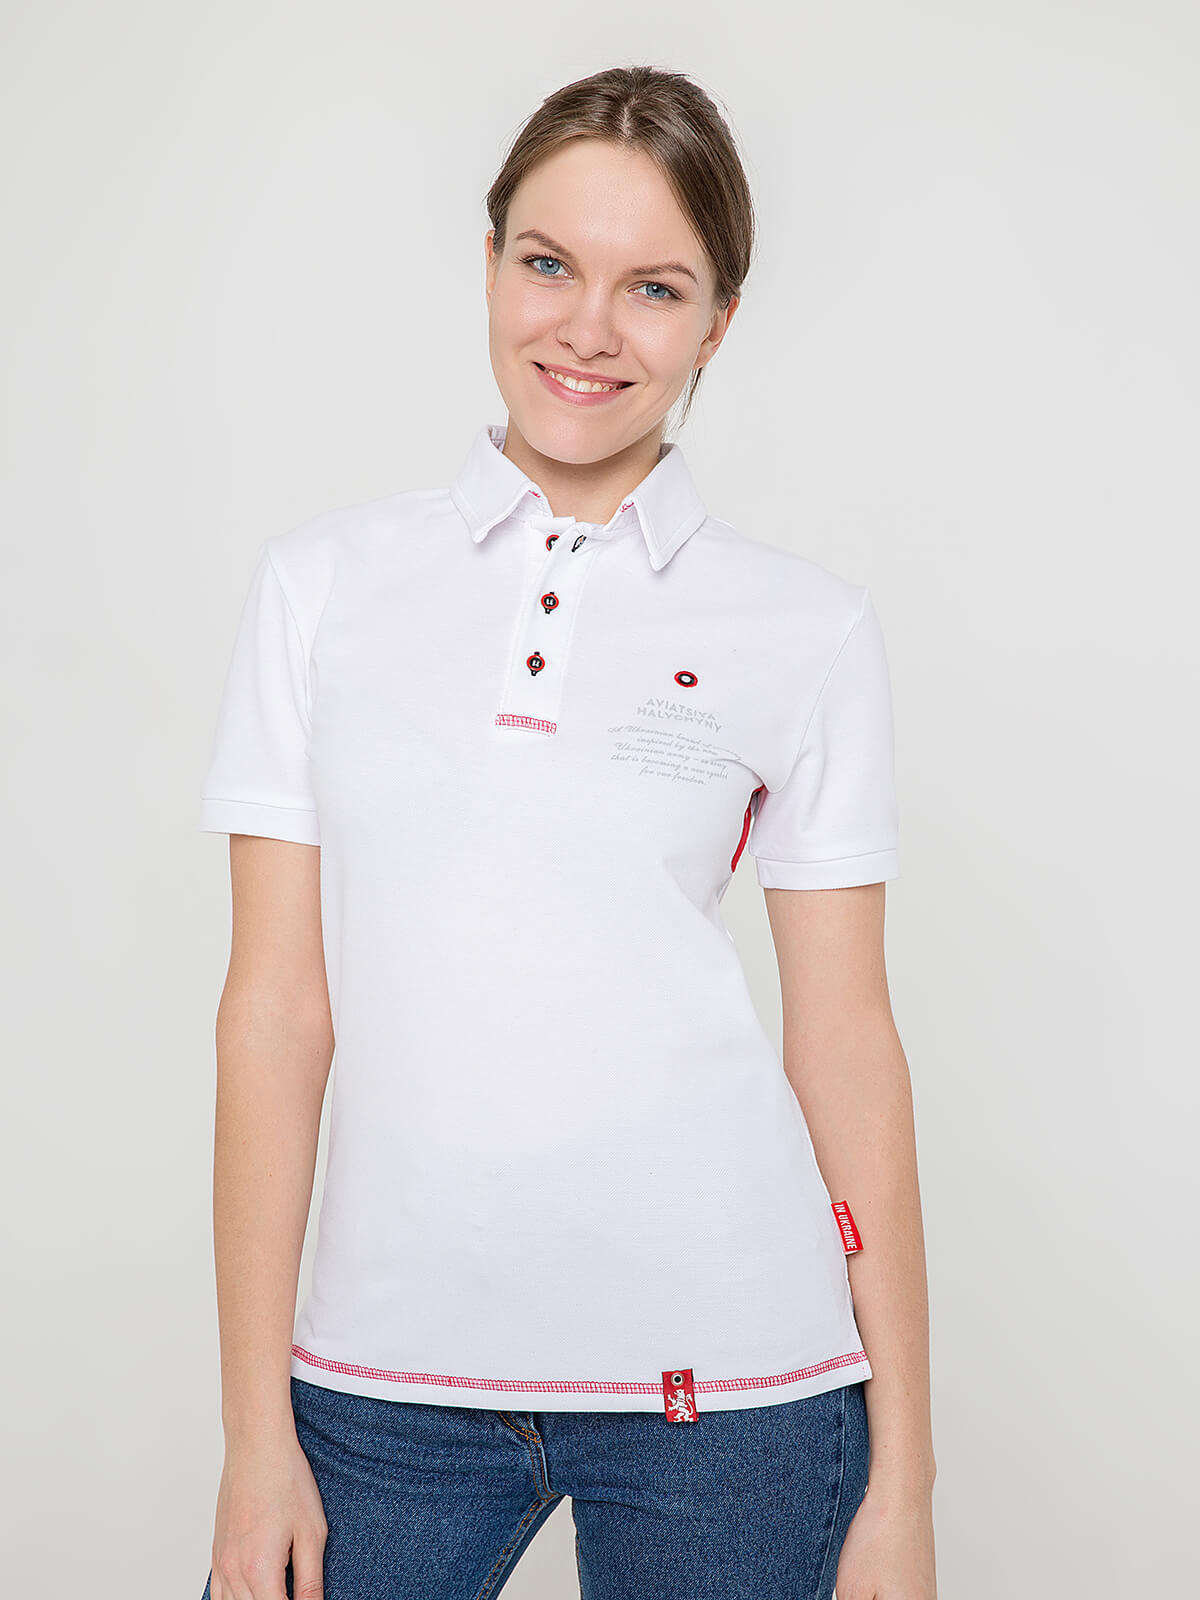 Women's Polo Shirt Wings. Color white. Unisex polo (men’s sizes).